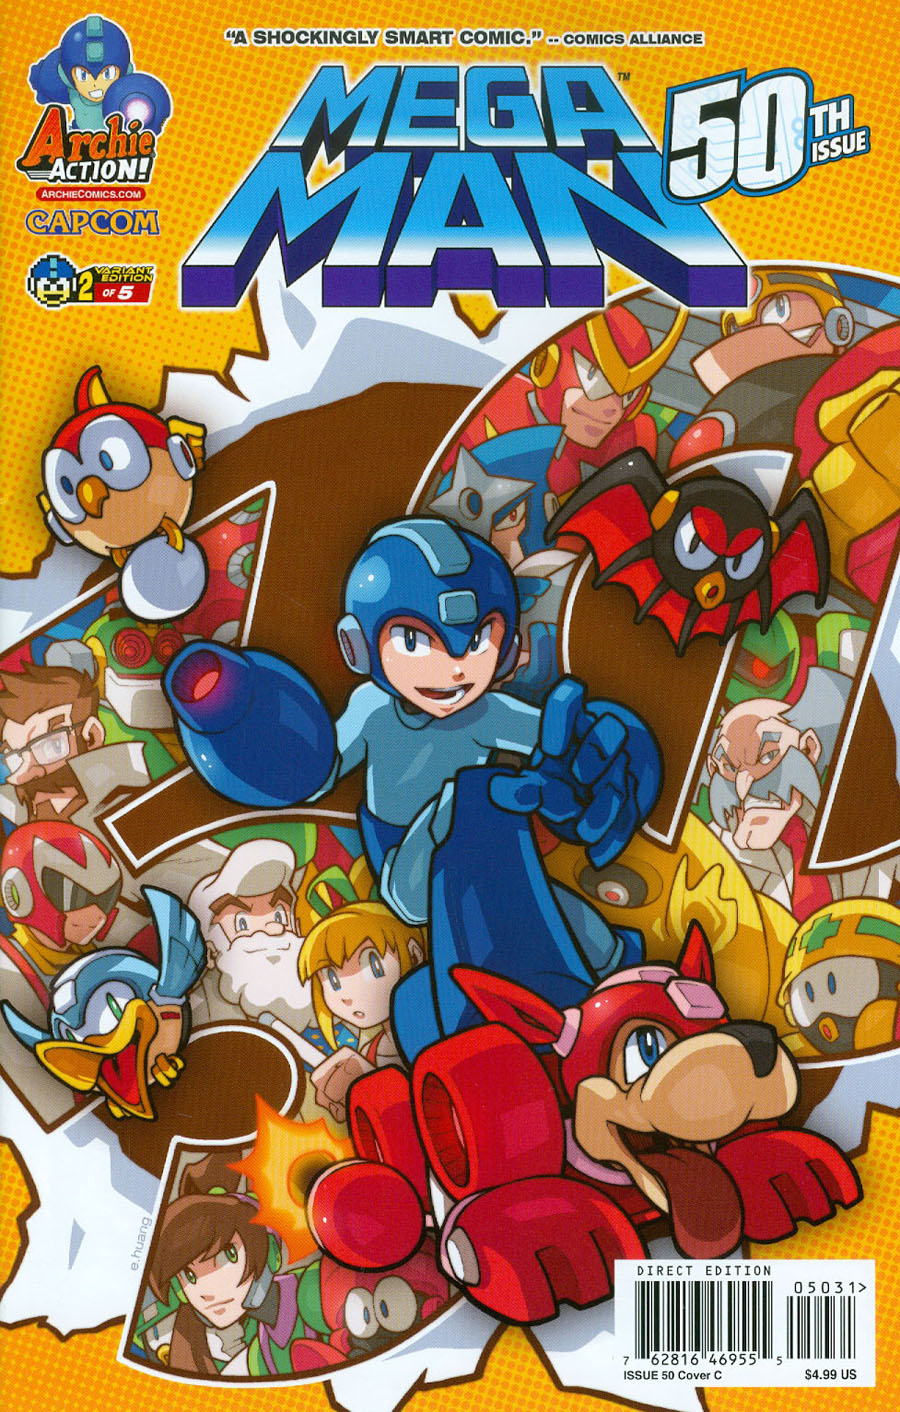 Mega Man Vol 2 #50 Cover C Variant Edwin Huang Cover (Worlds Unite Part 4)